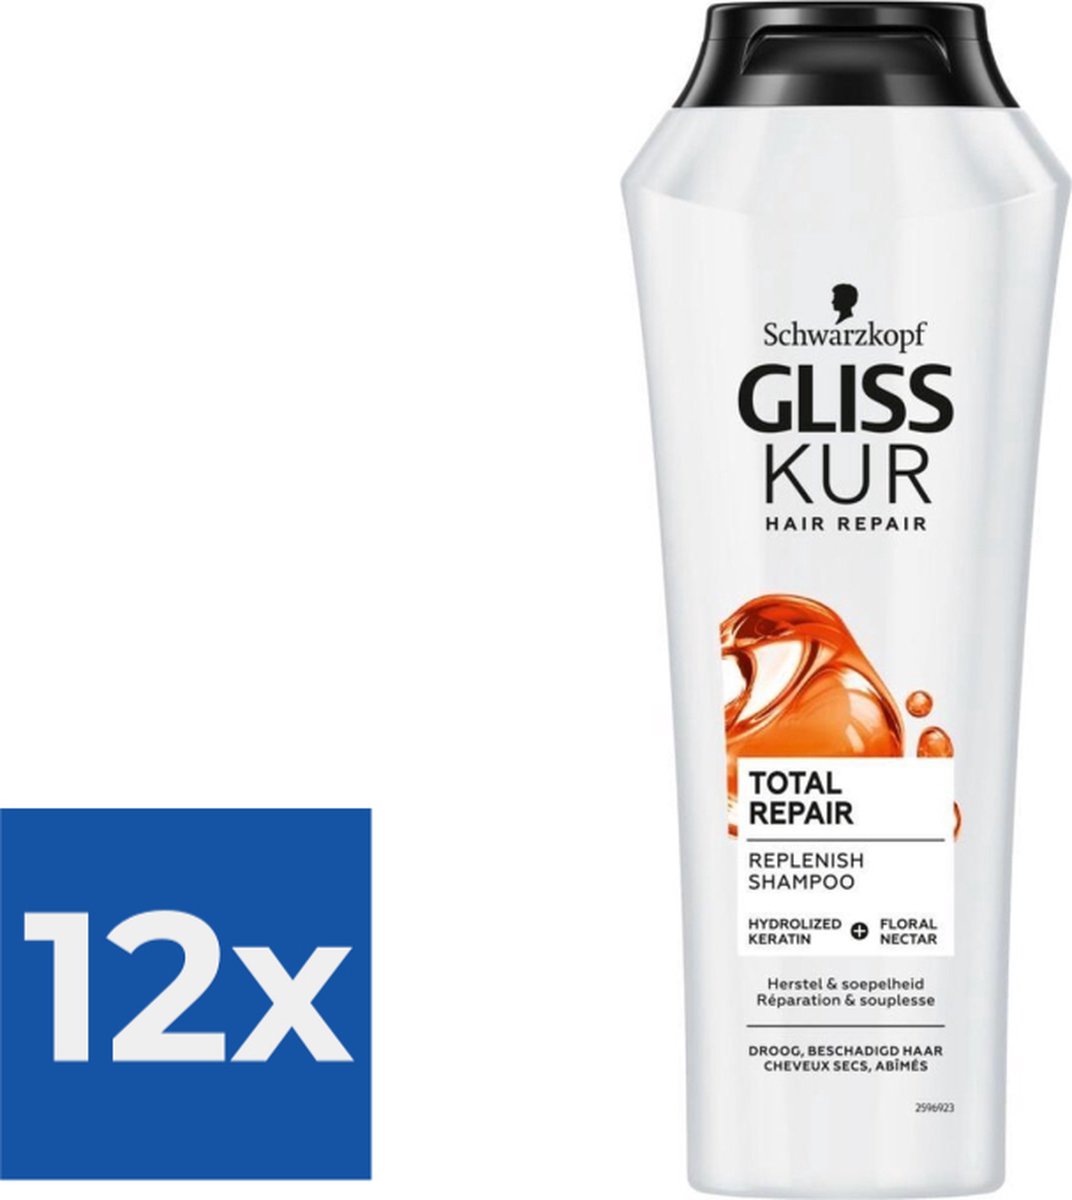 Gliss Kur Shampoo Total Repair 19 - Voordeelverpakking 12 stuks